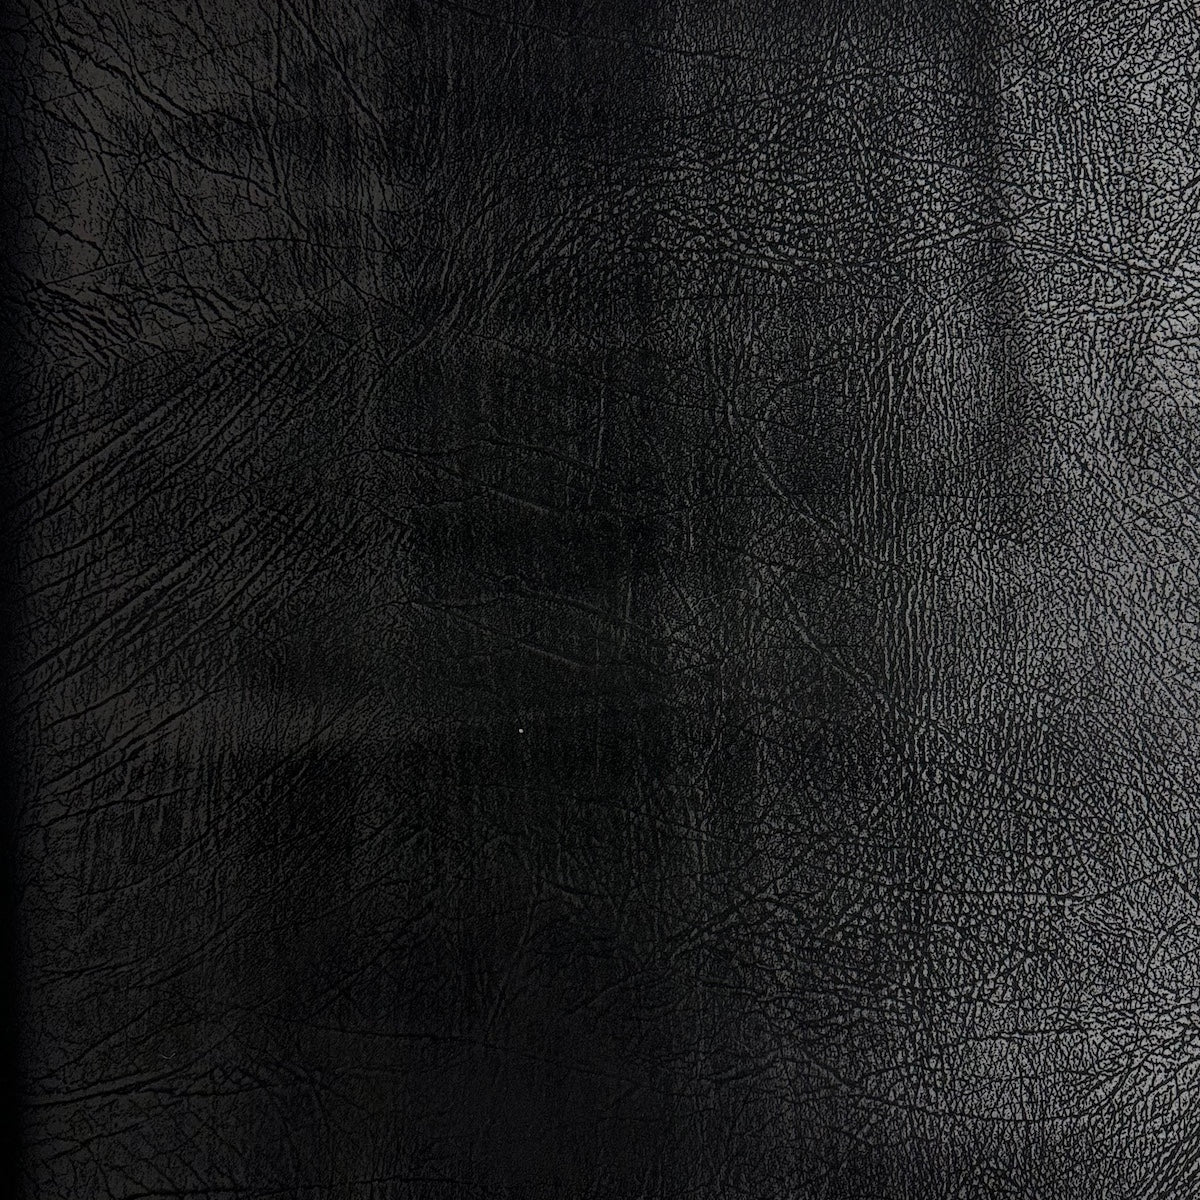 Black sherpa seamless pattern with fur texture. Sheepskin vector  background. Cozy warm plaid. Fleece, velvet or flannel blanket. Faux animal  wool swatch. Digital illustration Stock Vector